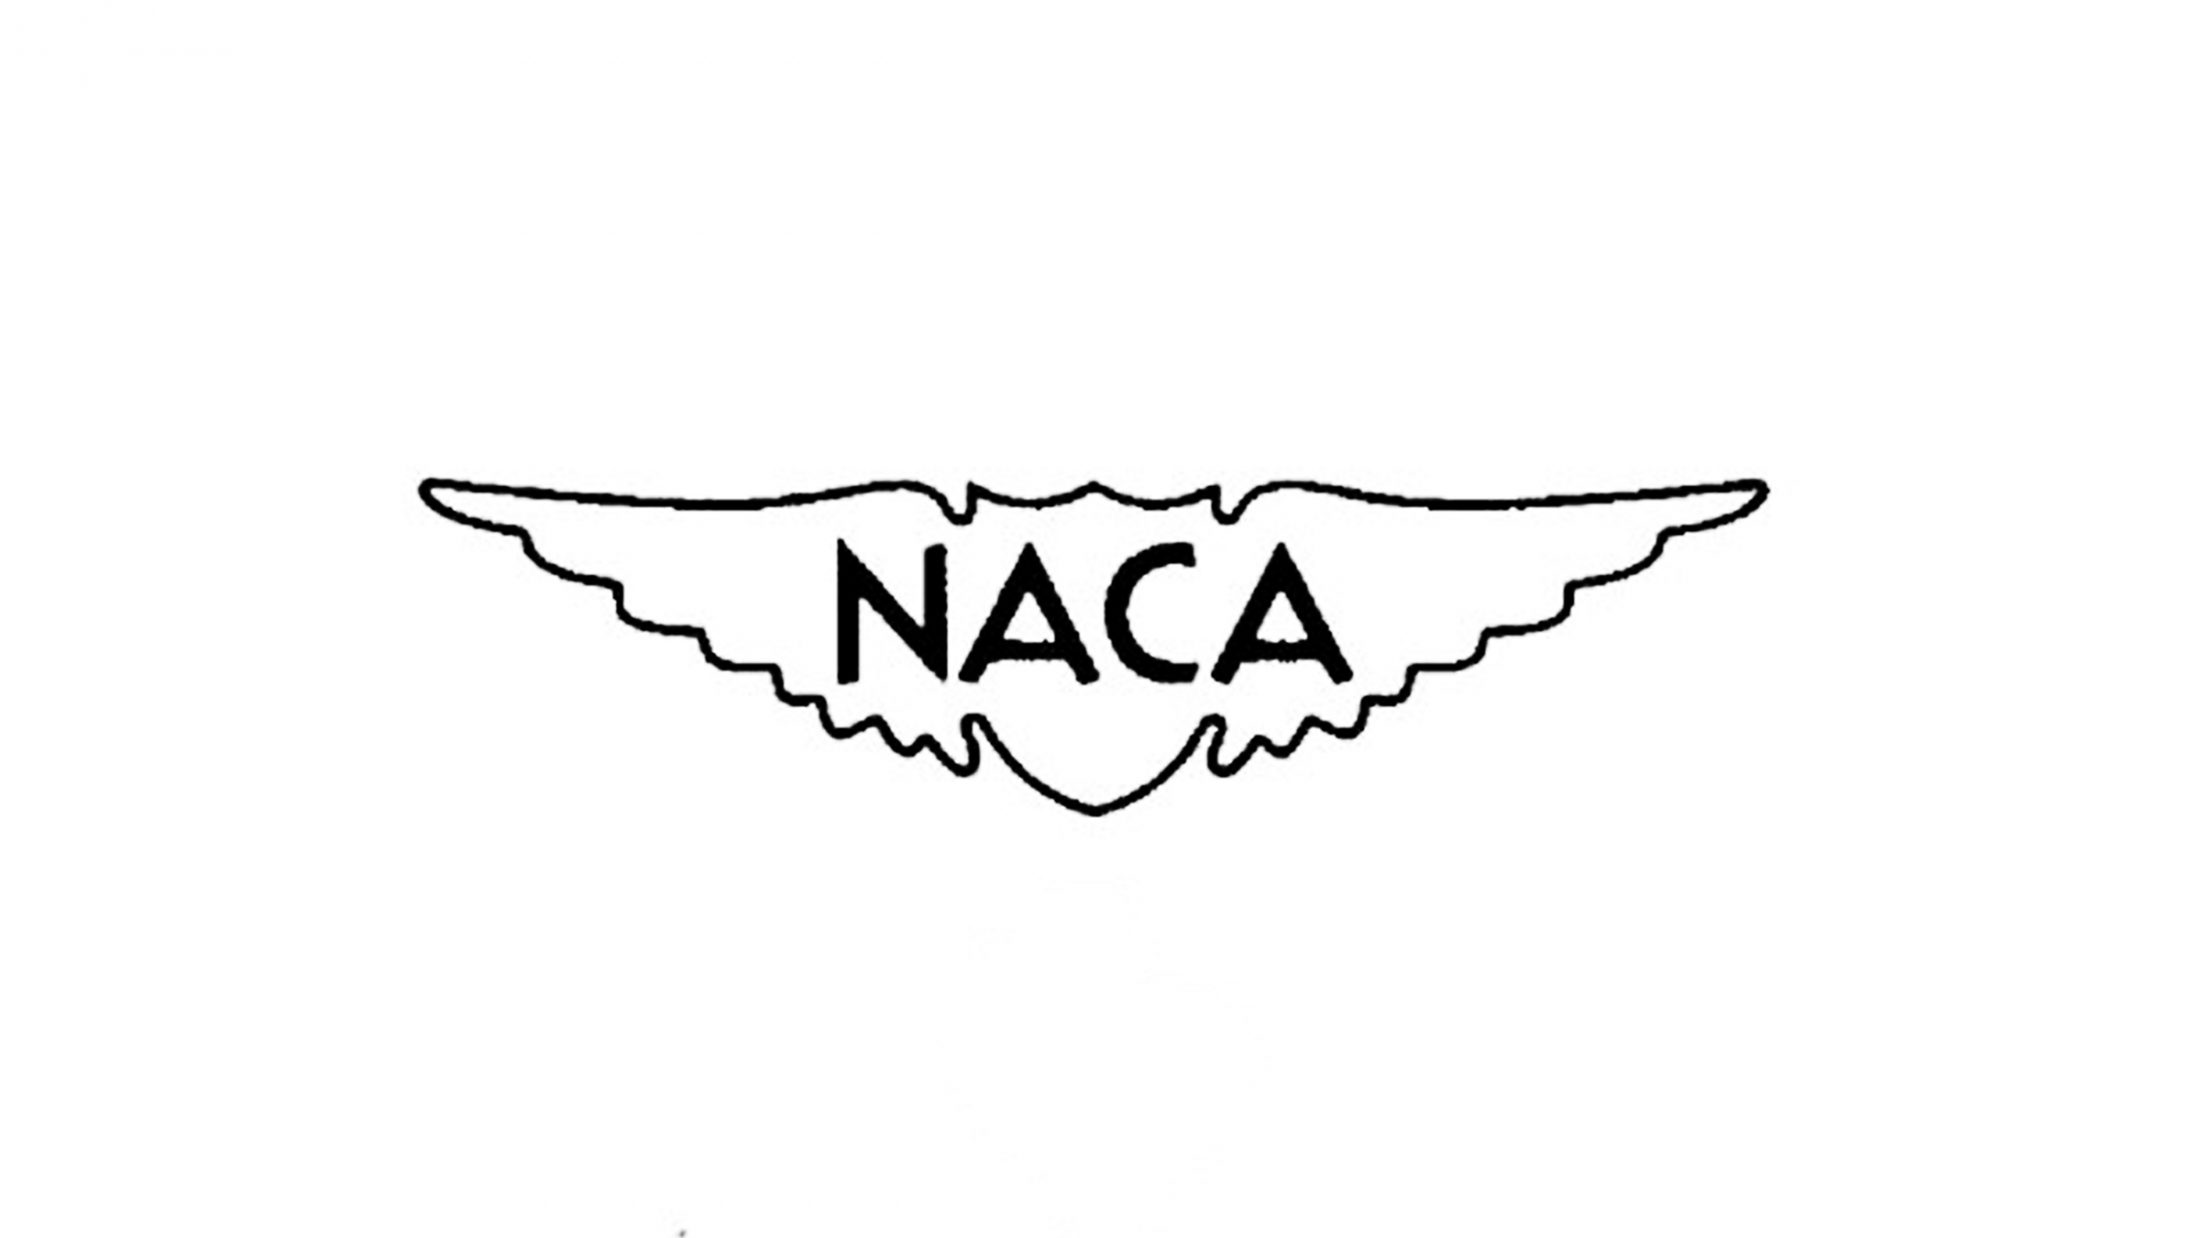 NACA was the original NASA before NASA was NASA